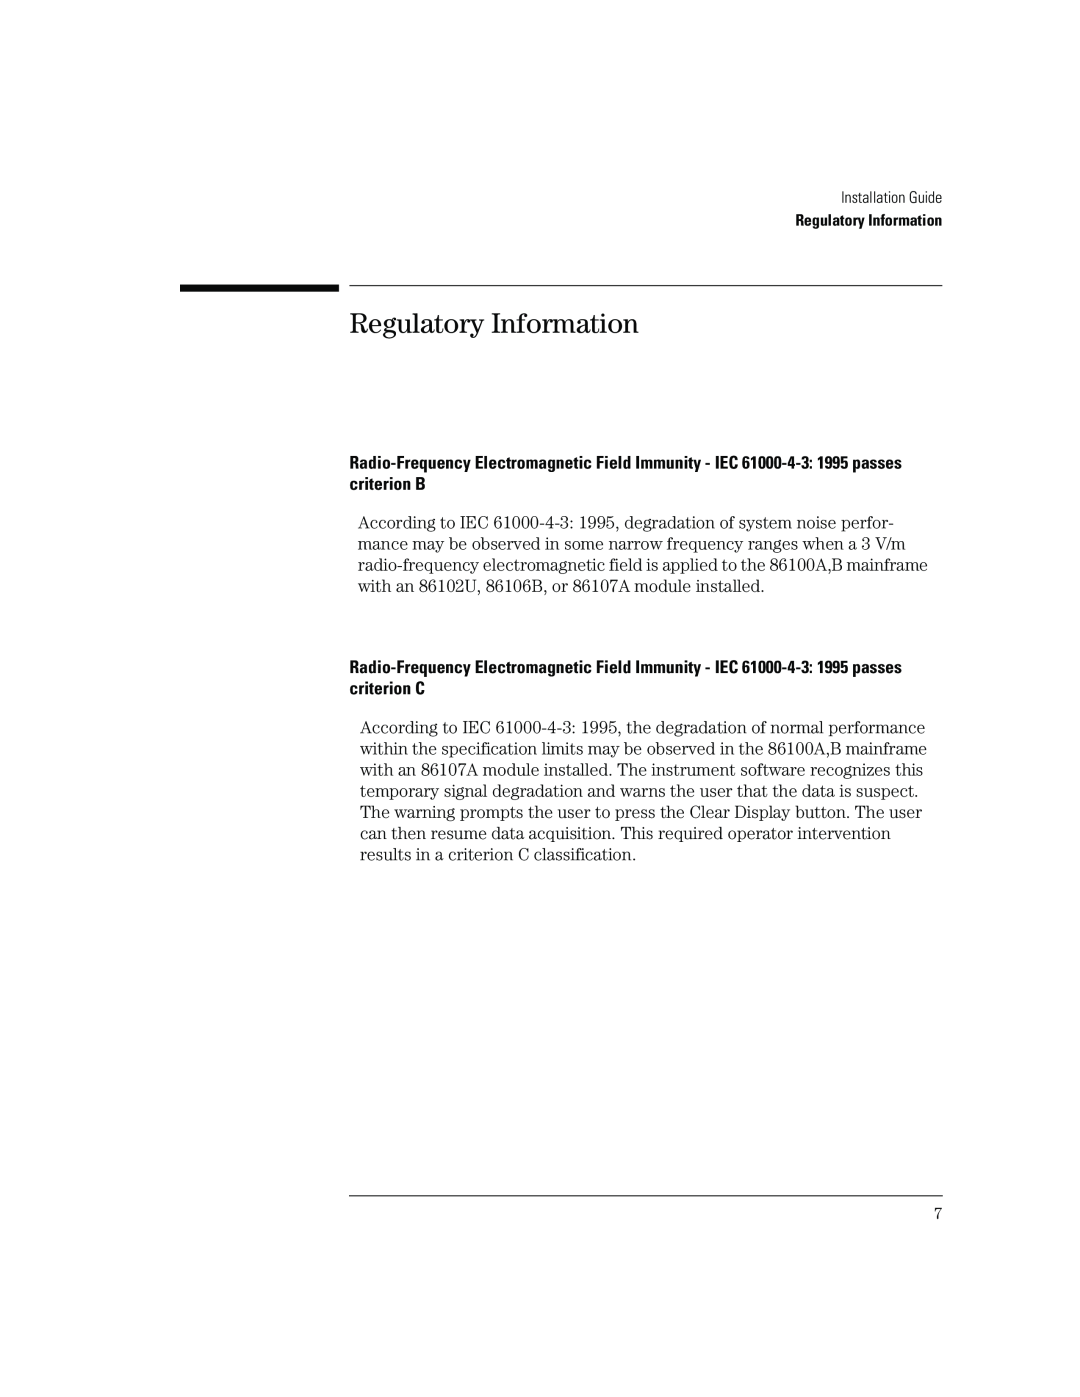 Agilent Technologies 86100A, B manual Regulatory Information 